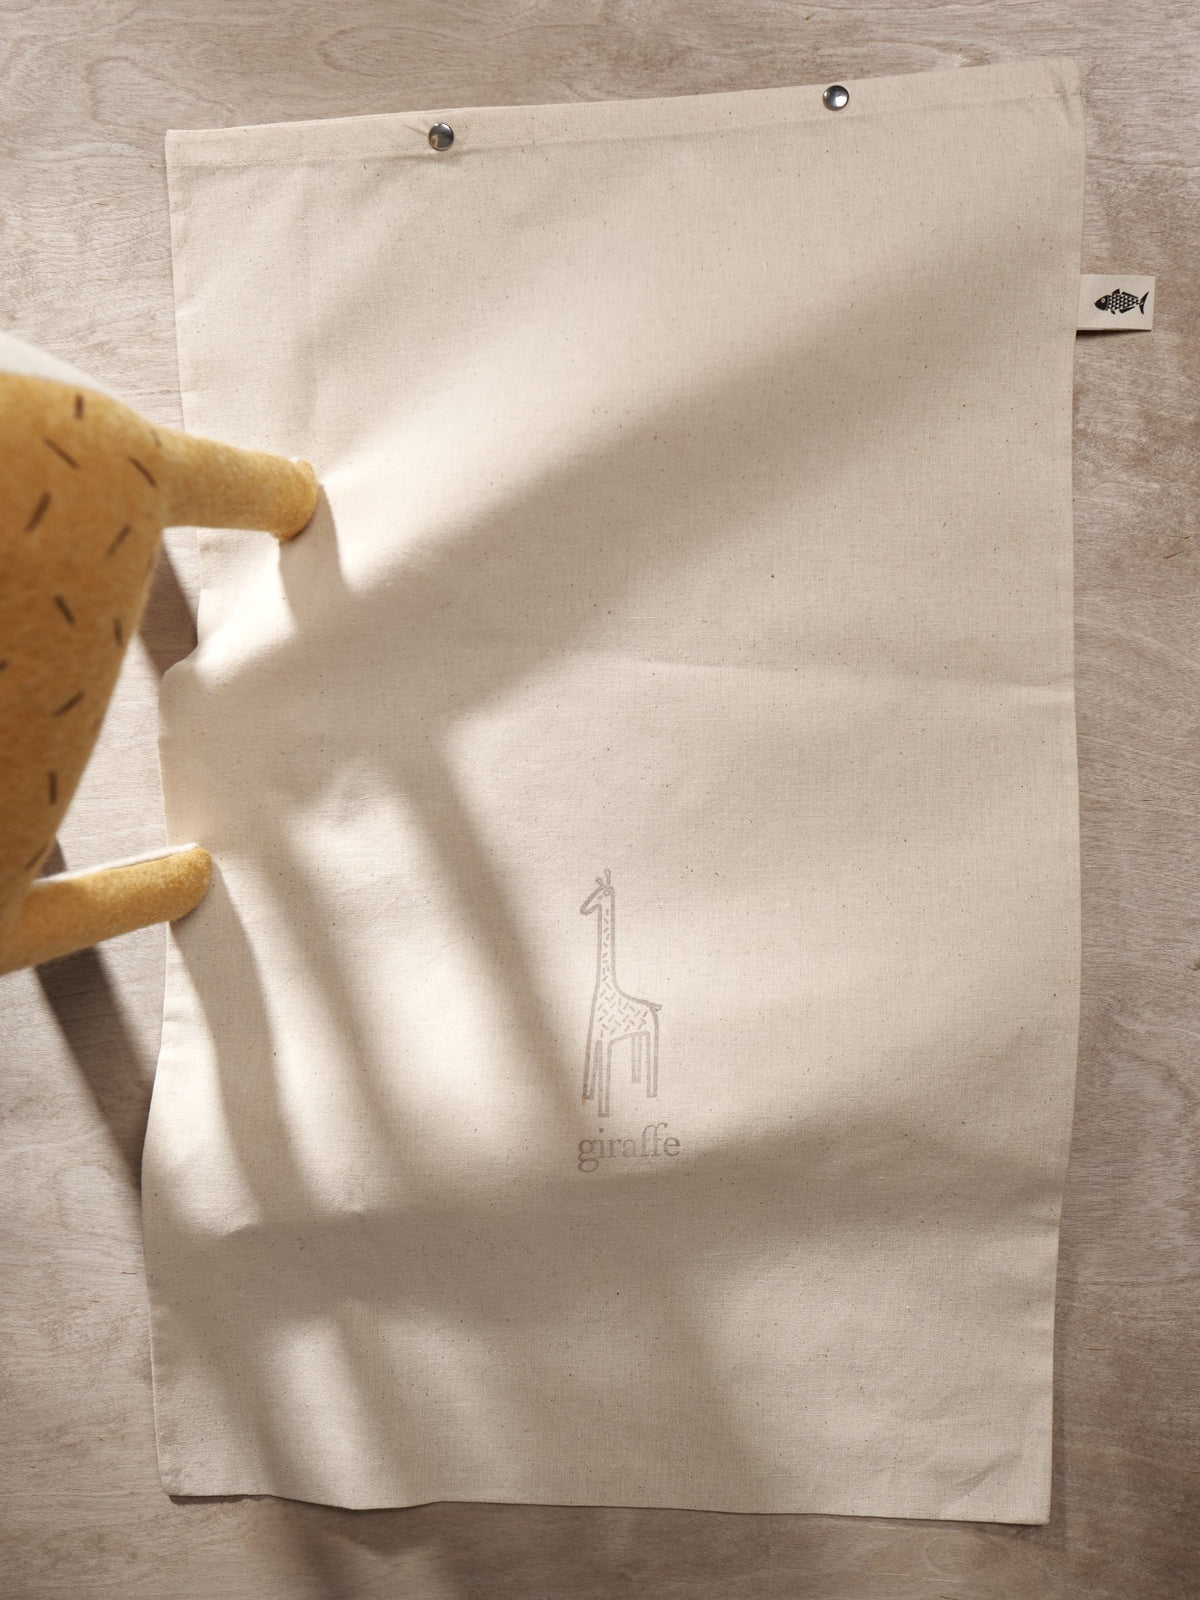 A ZIFFA, the Nubian giraffe stuffed animal is sitting on top of a Carapau towel.